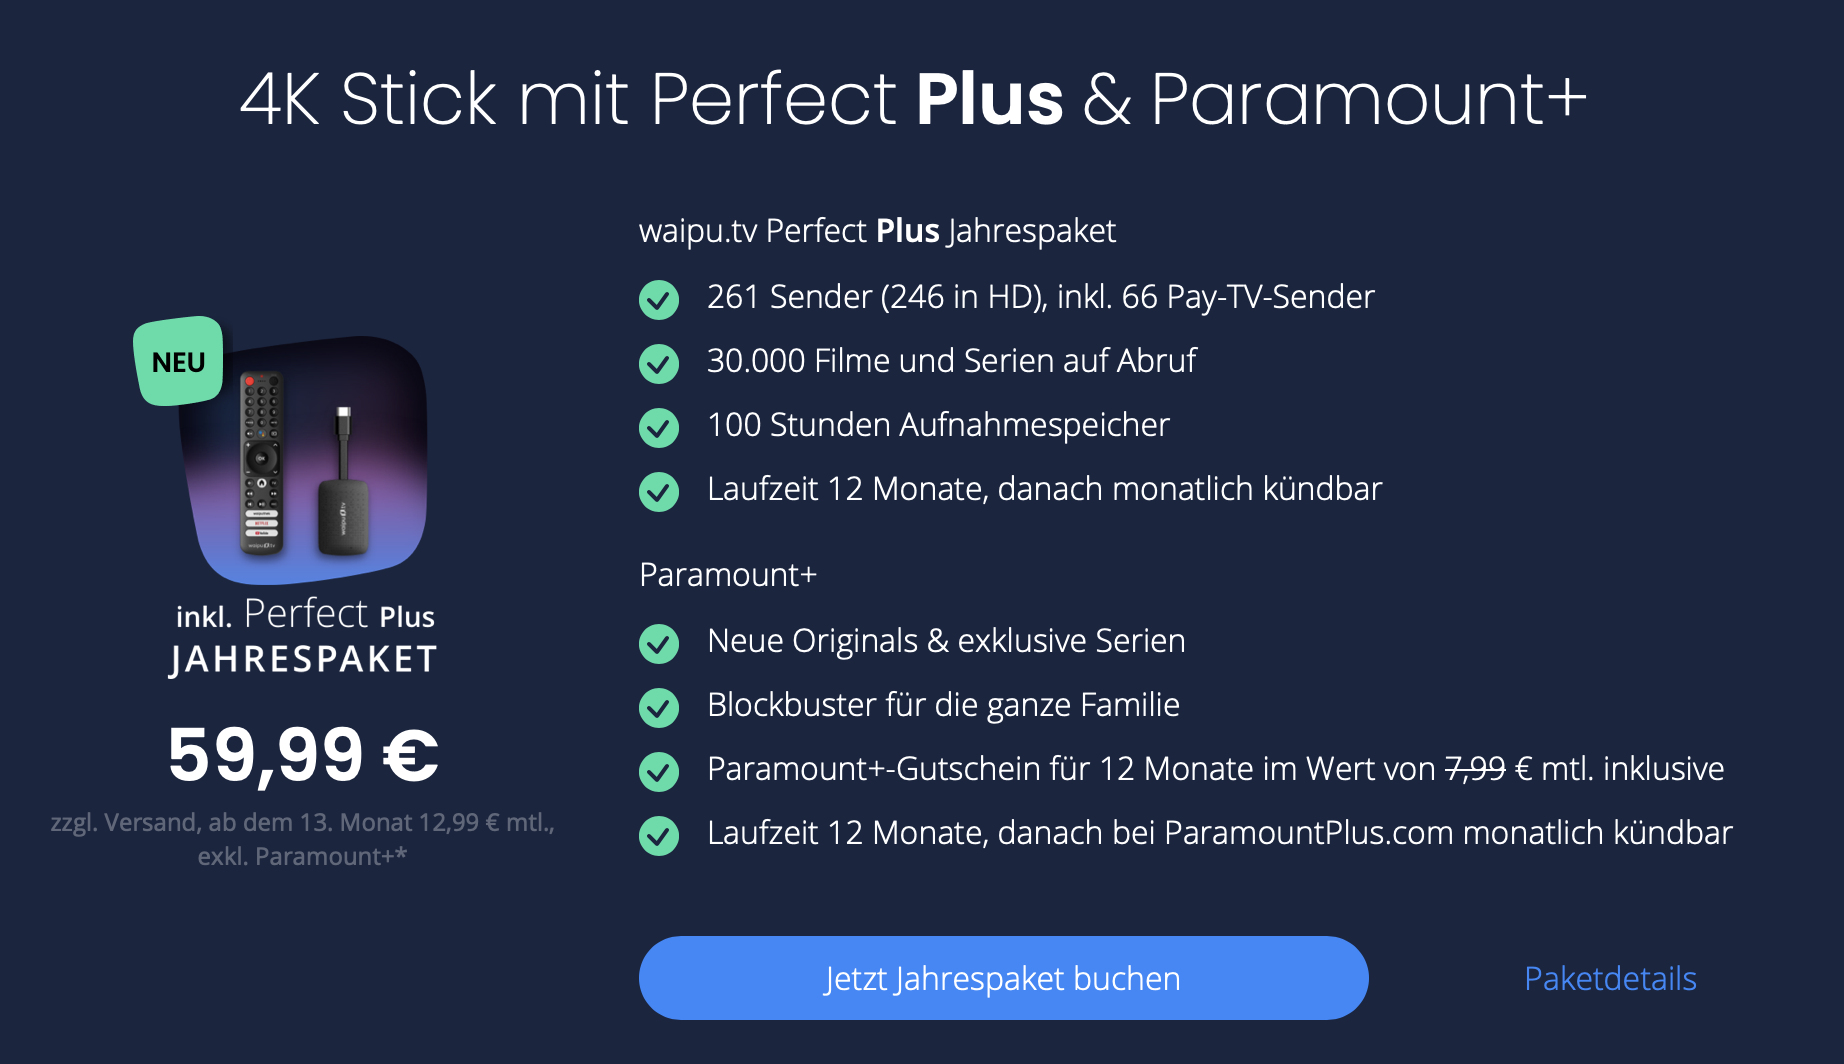 1 Stick 4K inkl. Perfect 59,99€ für Jahr Plus waipu.tv